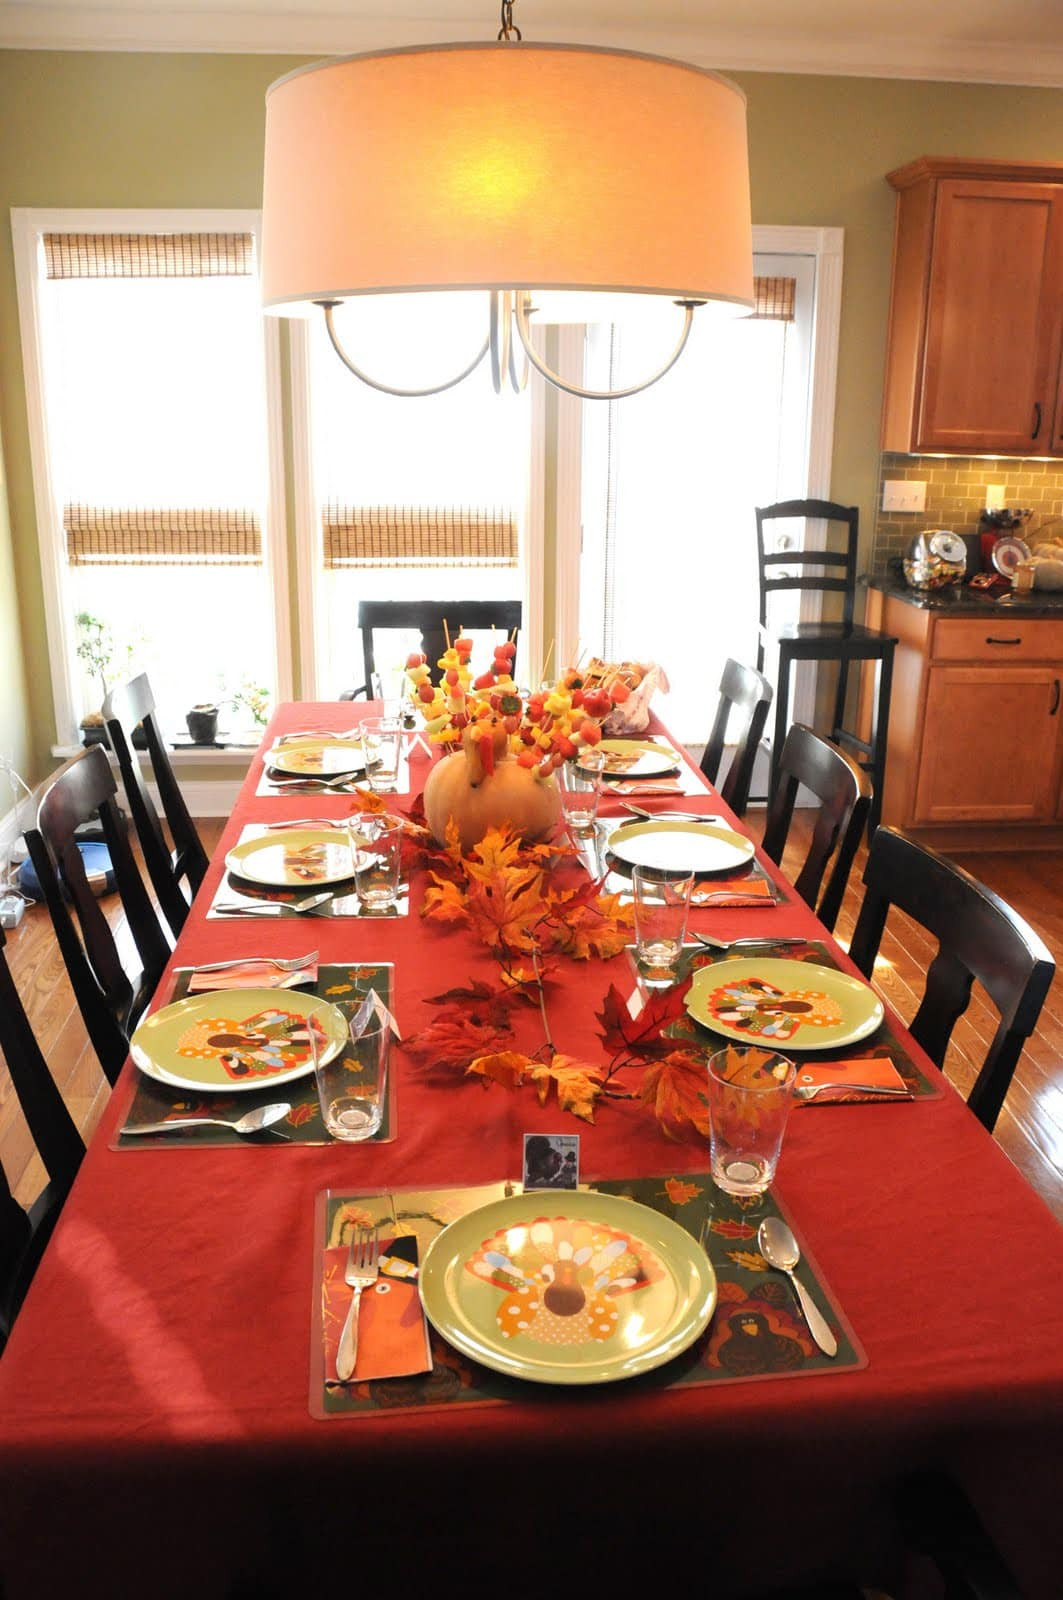 Thanksgiving Table Decoration Ideas
 Thanksgiving Decor The Polkadot Chair